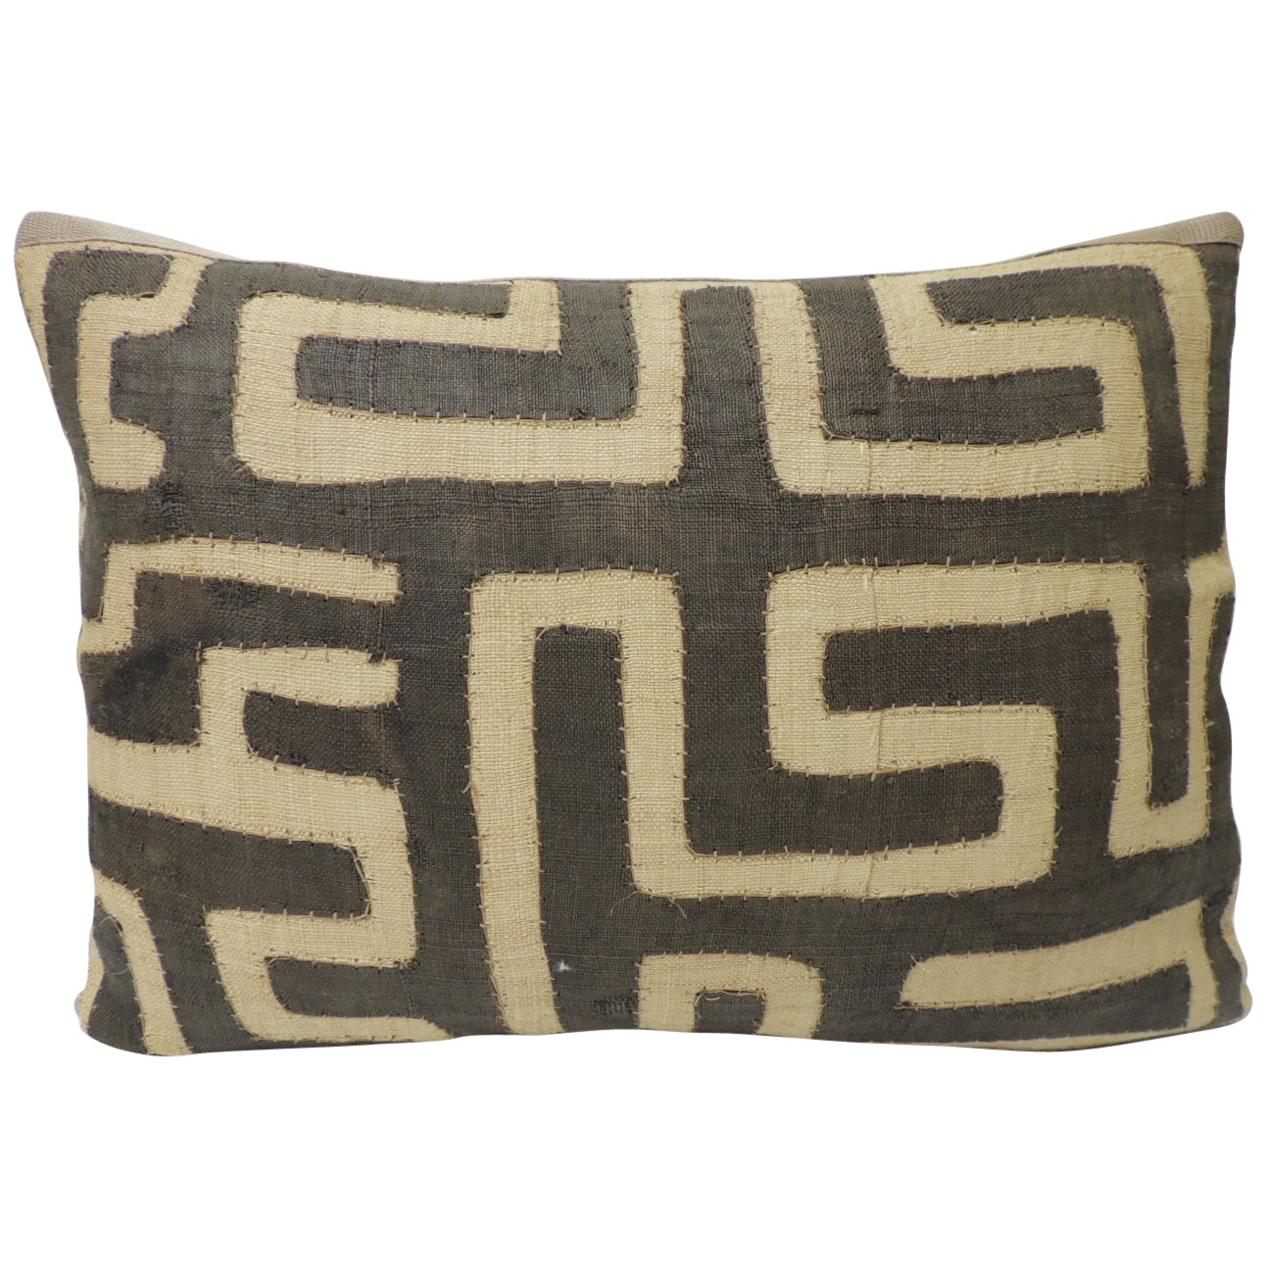 Vintage Tan and Brown African Artisanal Kuba Raffia Decorative Bolster Pillow